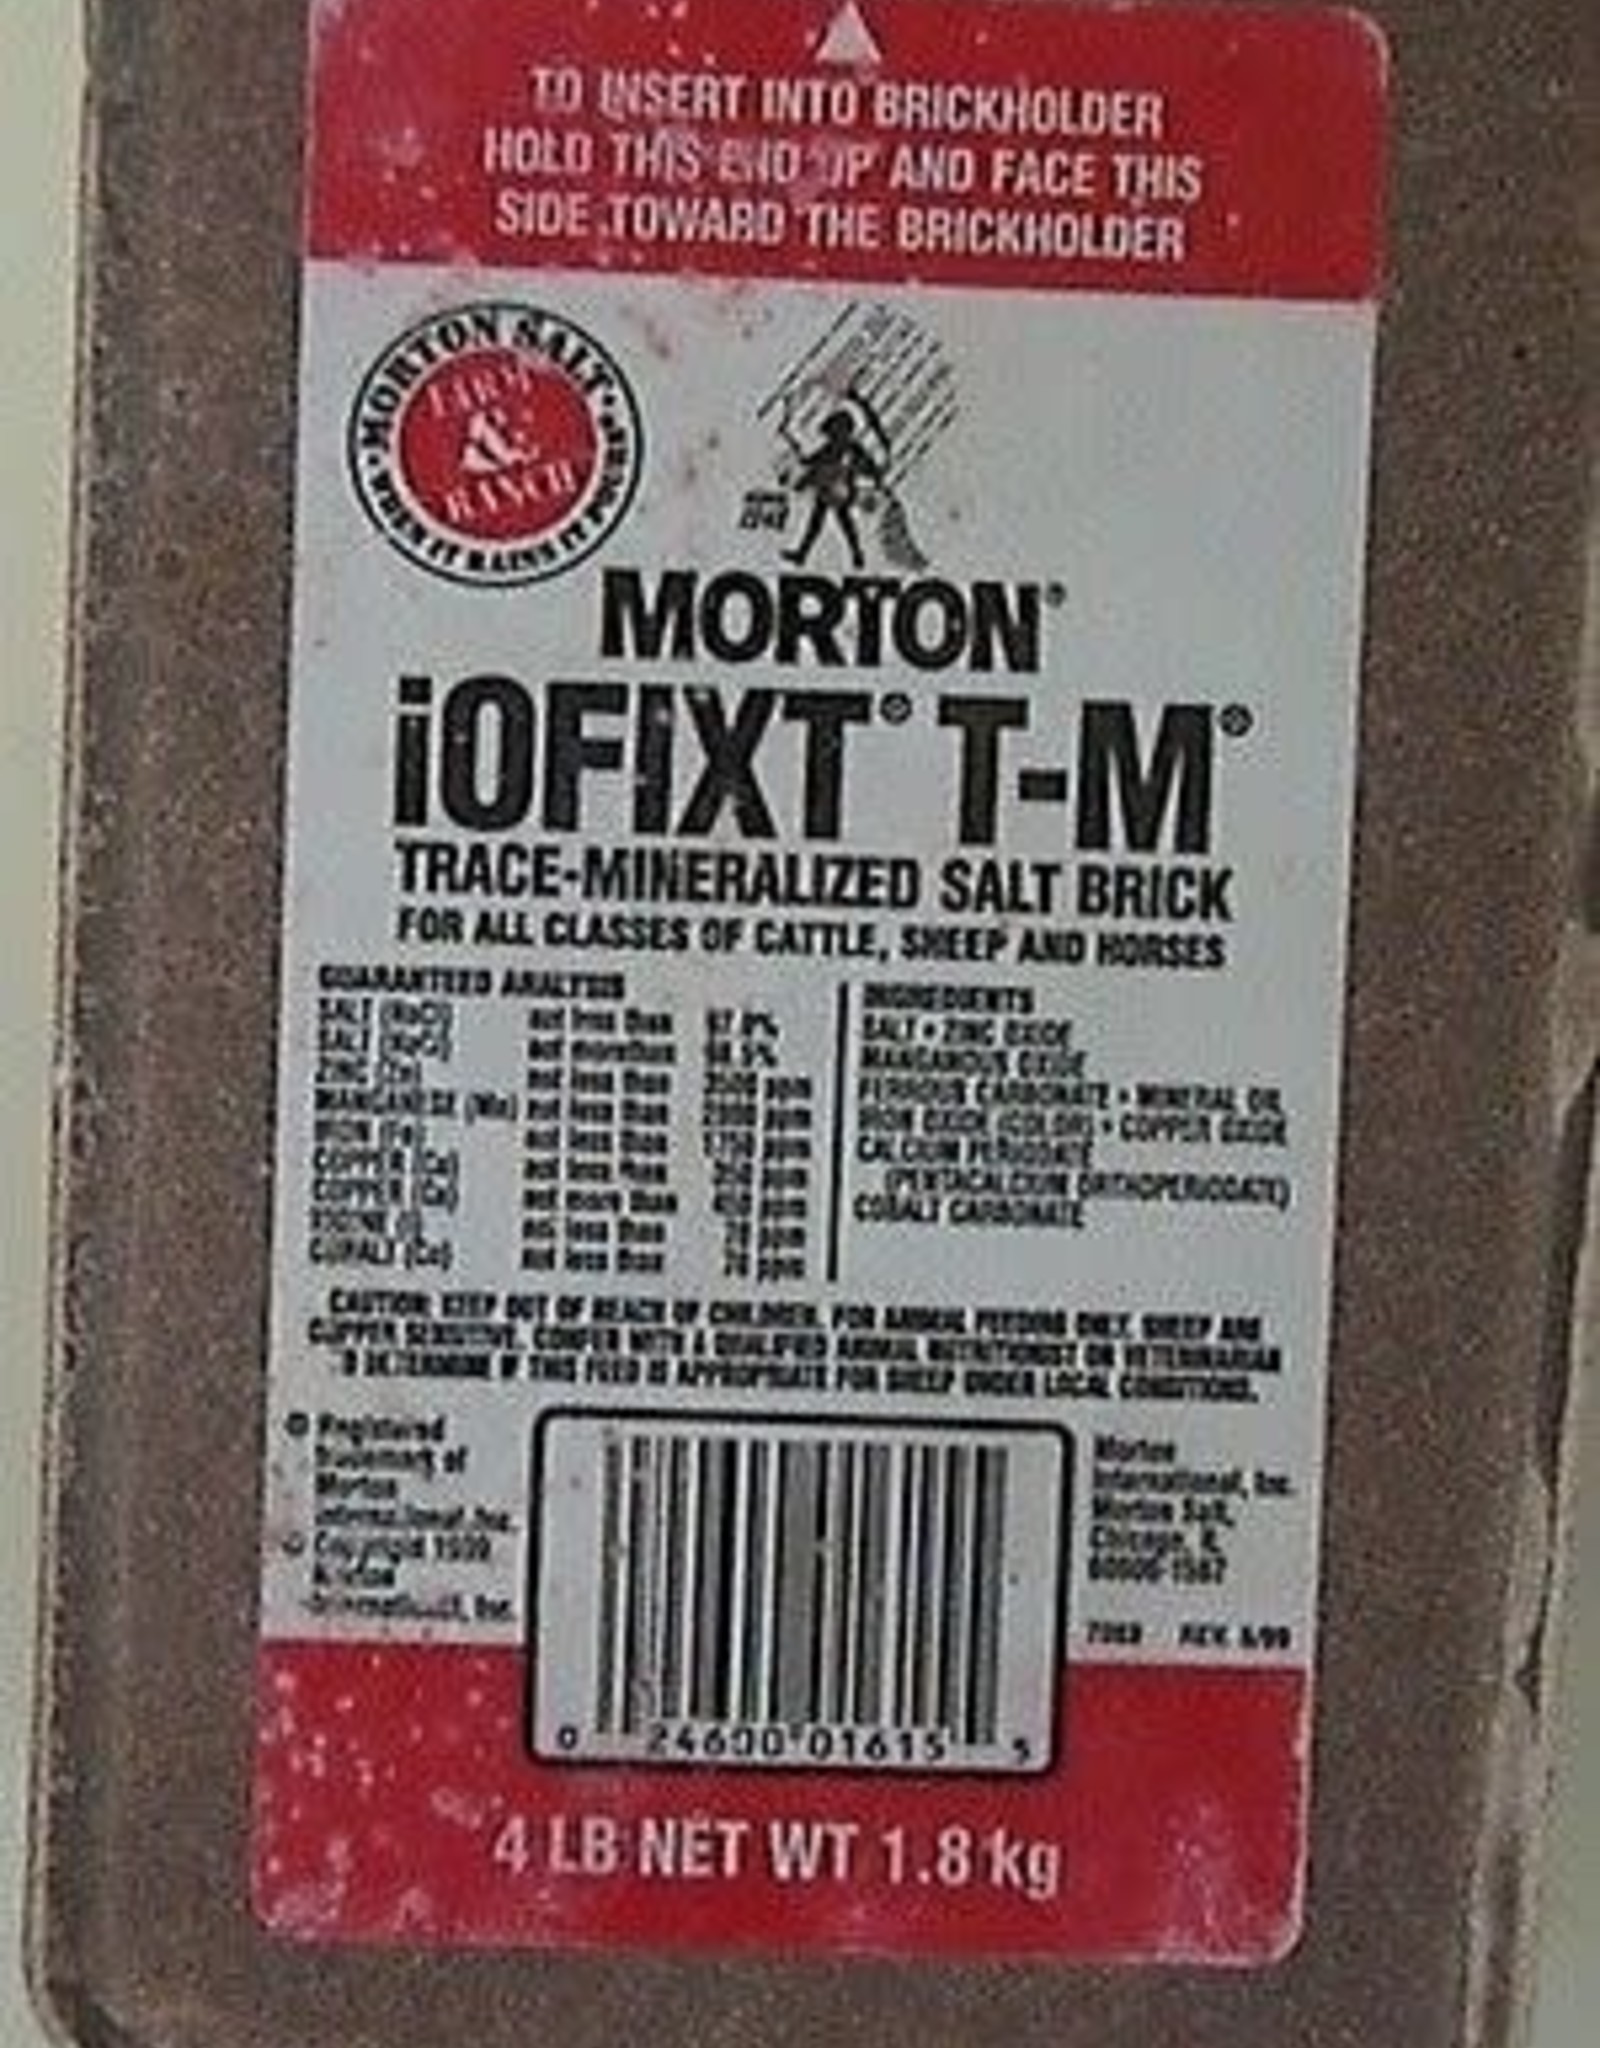 Morton trace-mineralized 4lb salt brick